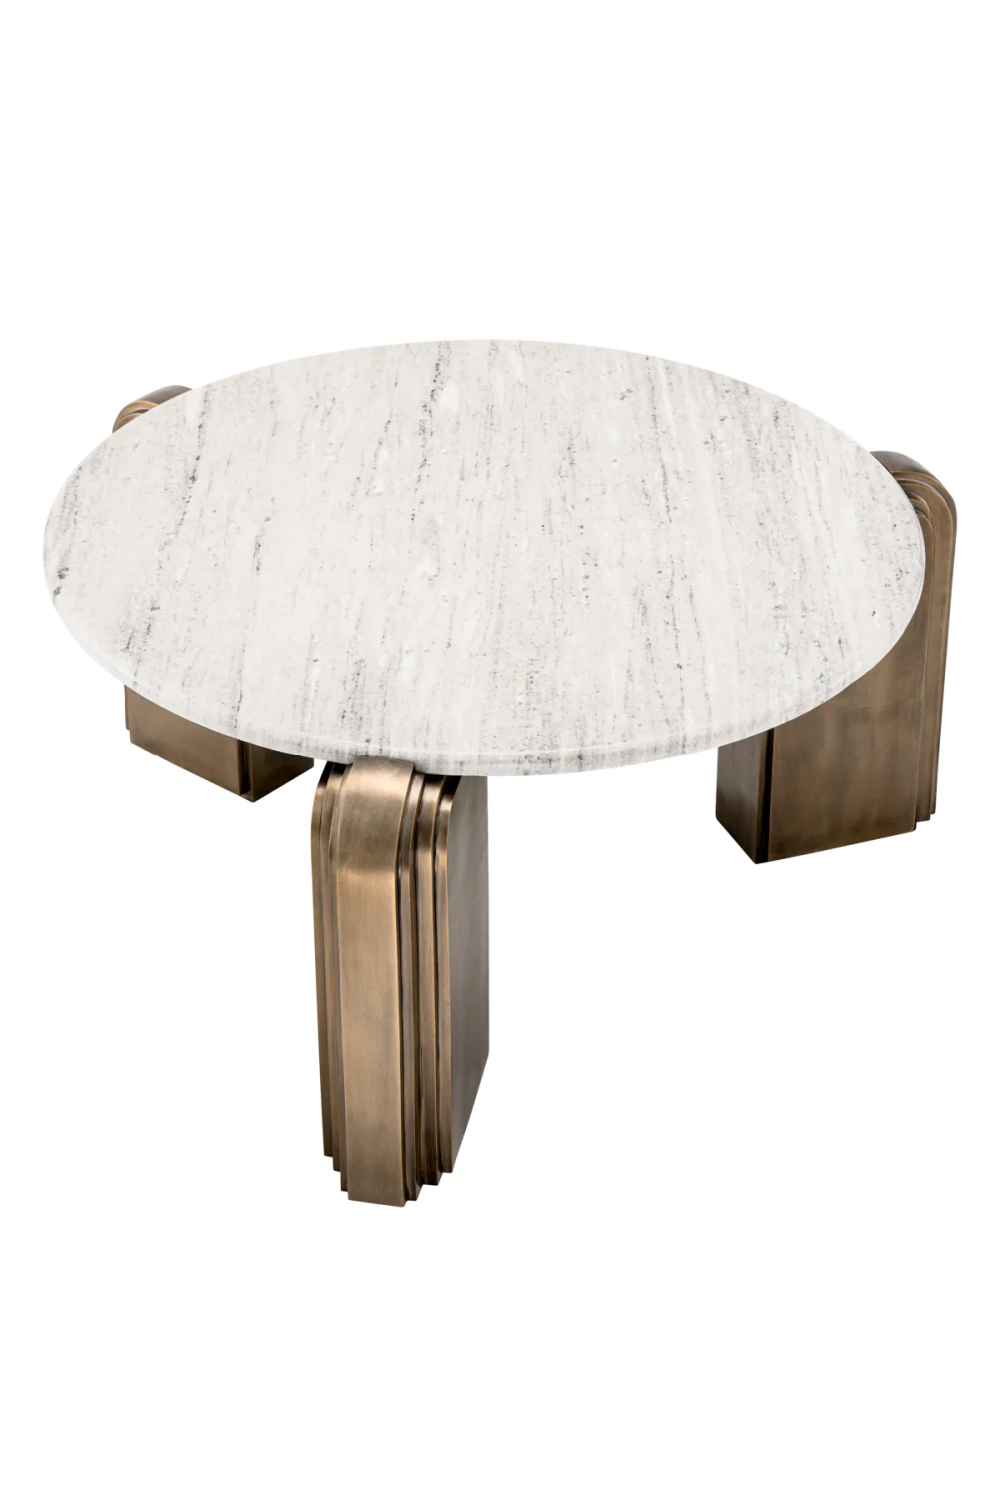 Beige Marble Modern Coffee Table | Eichholtz Albion | Oroa .com